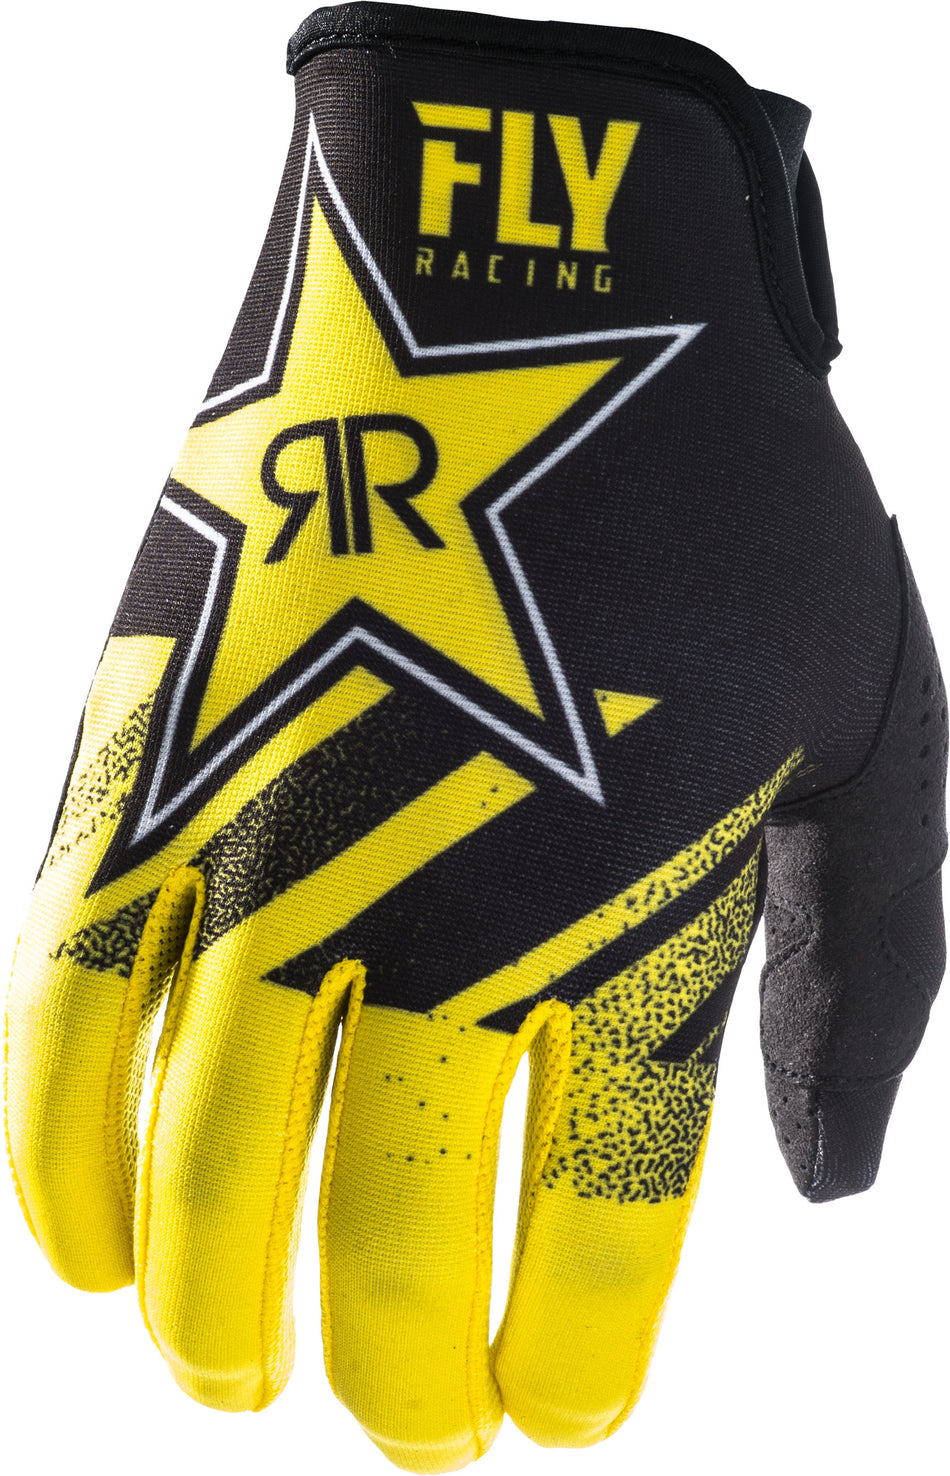 FLY RACING Lite Hydrogen Rockstar Gloves Yellow/Black Sz 09 372-01809